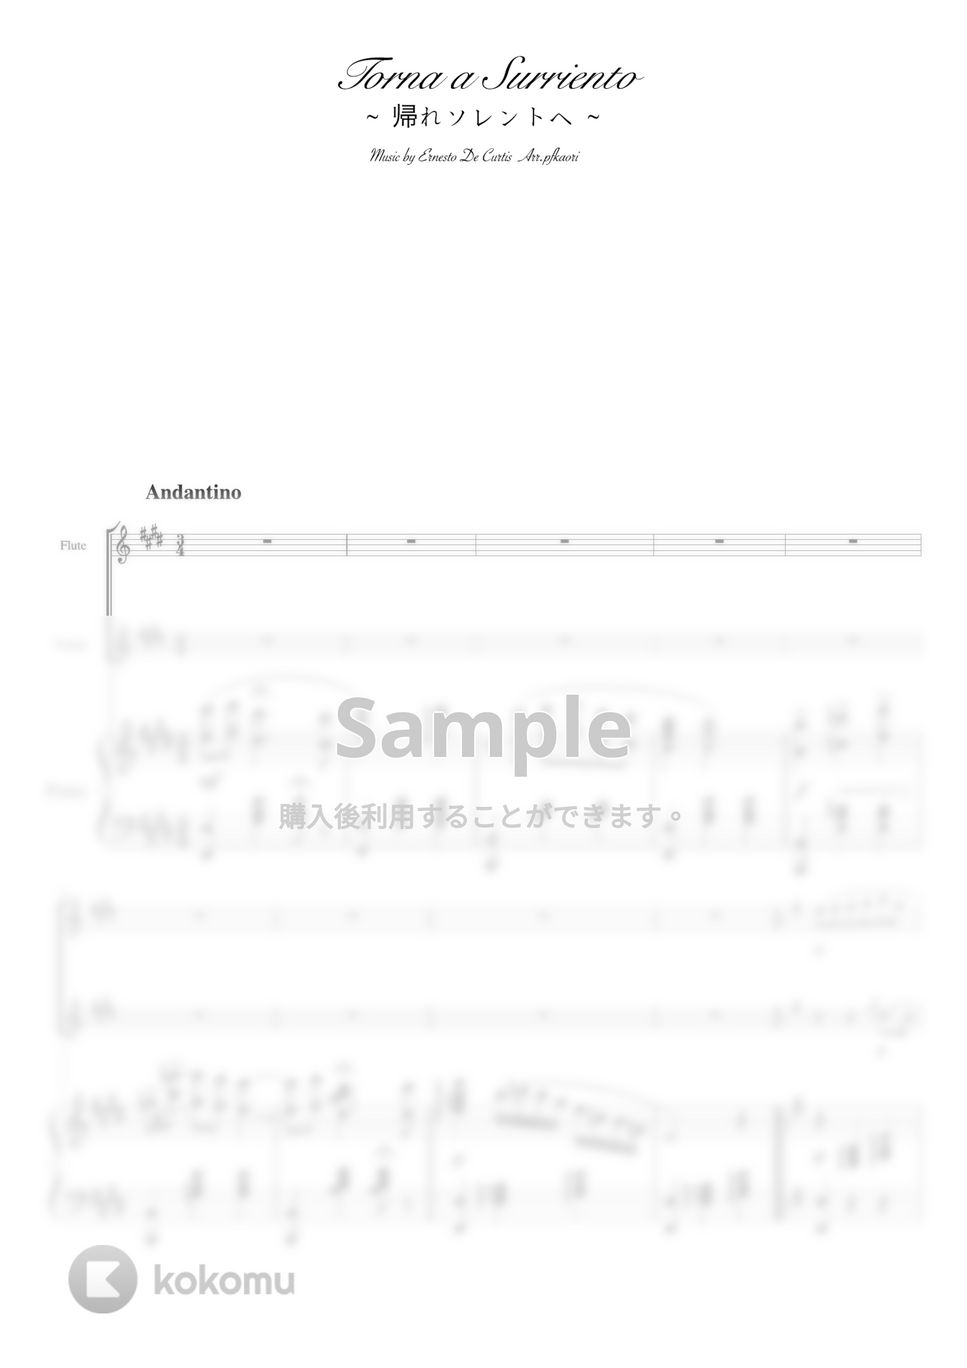 E.クルティス - 帰れソレントへ (E ピアノトリオ/バイオリン・フルート) by pfkaori